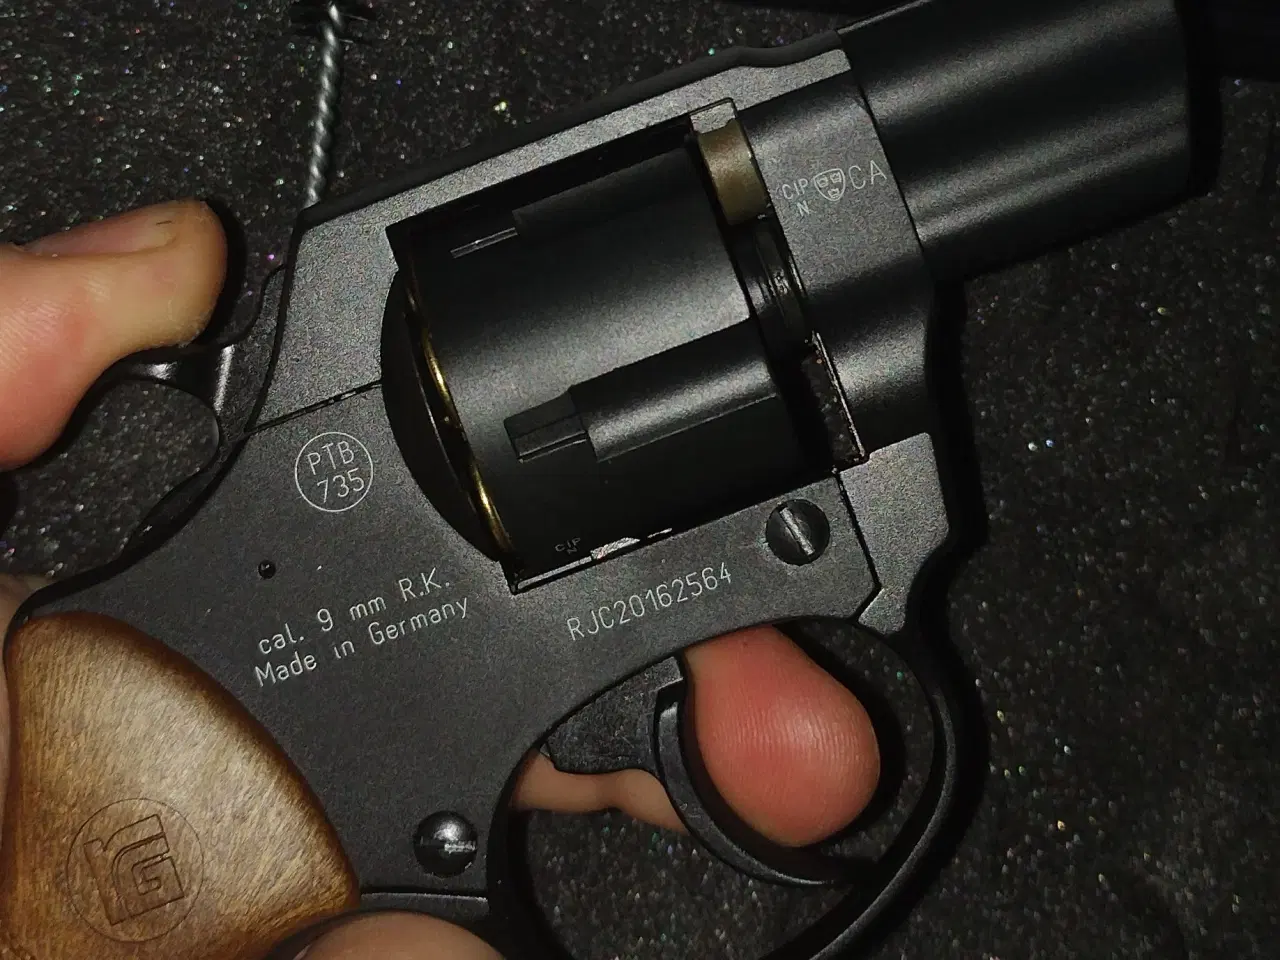 Billede 4 - Røhm RG59 signal pistol